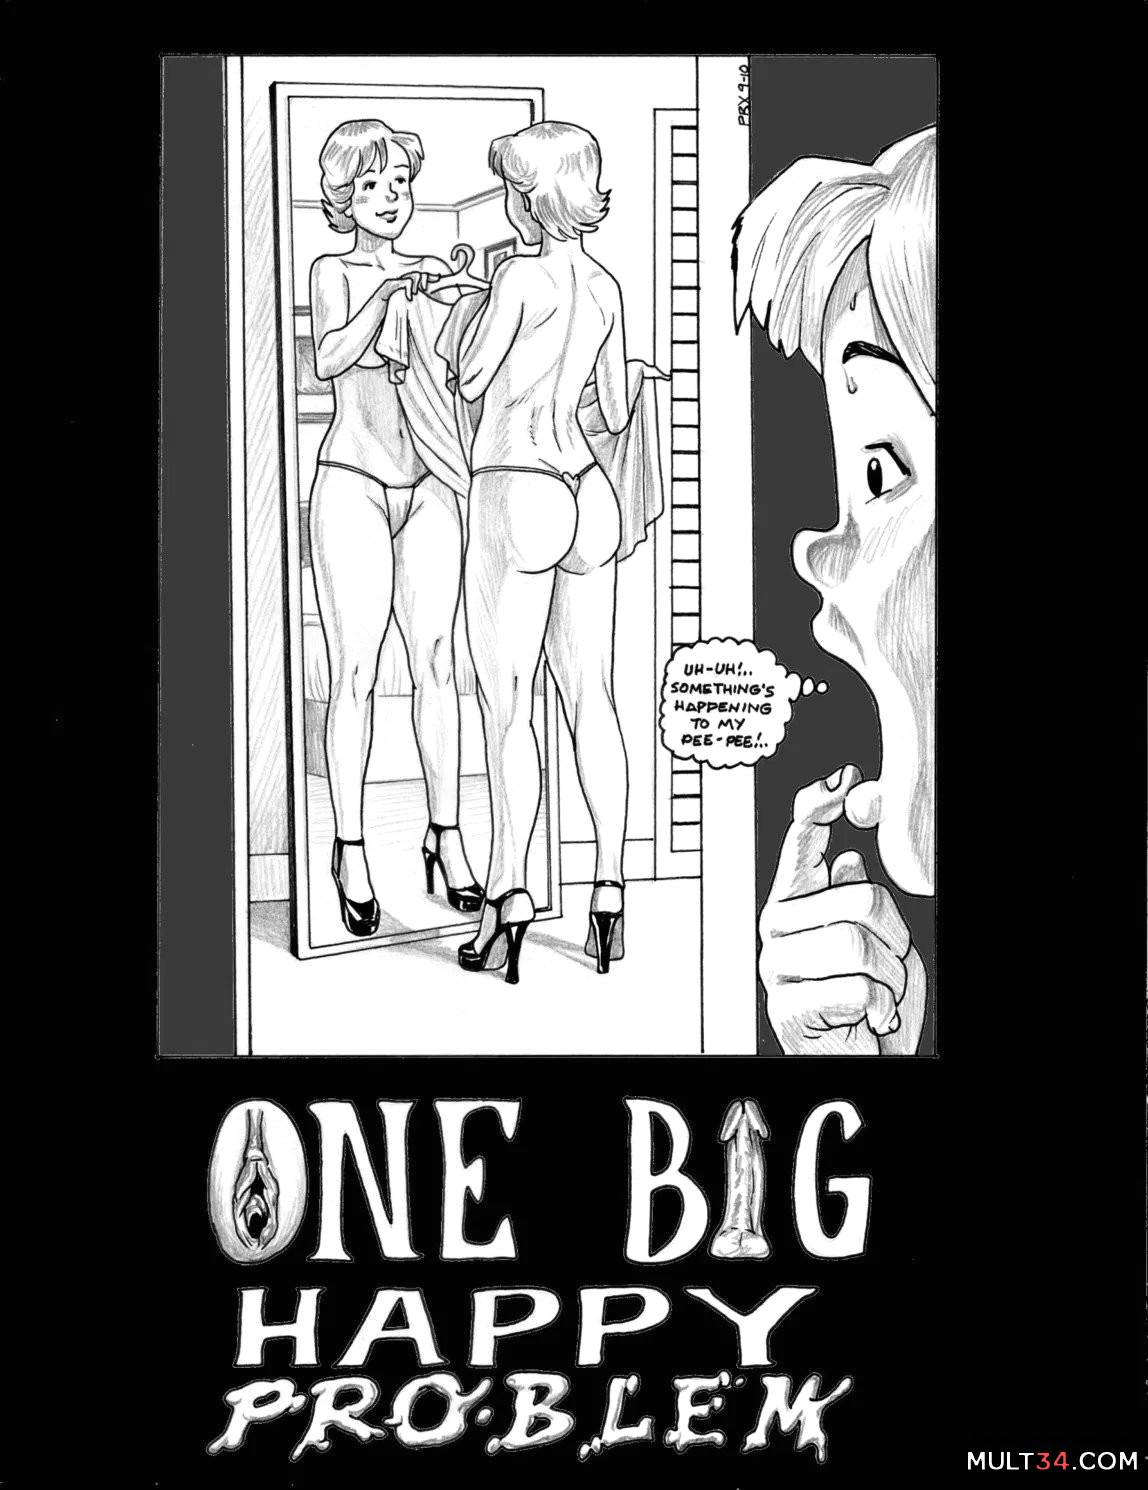 Jimmy Neutron Pee Porn - One Big Happy porn comics, cartoon porn comics, Rule 34